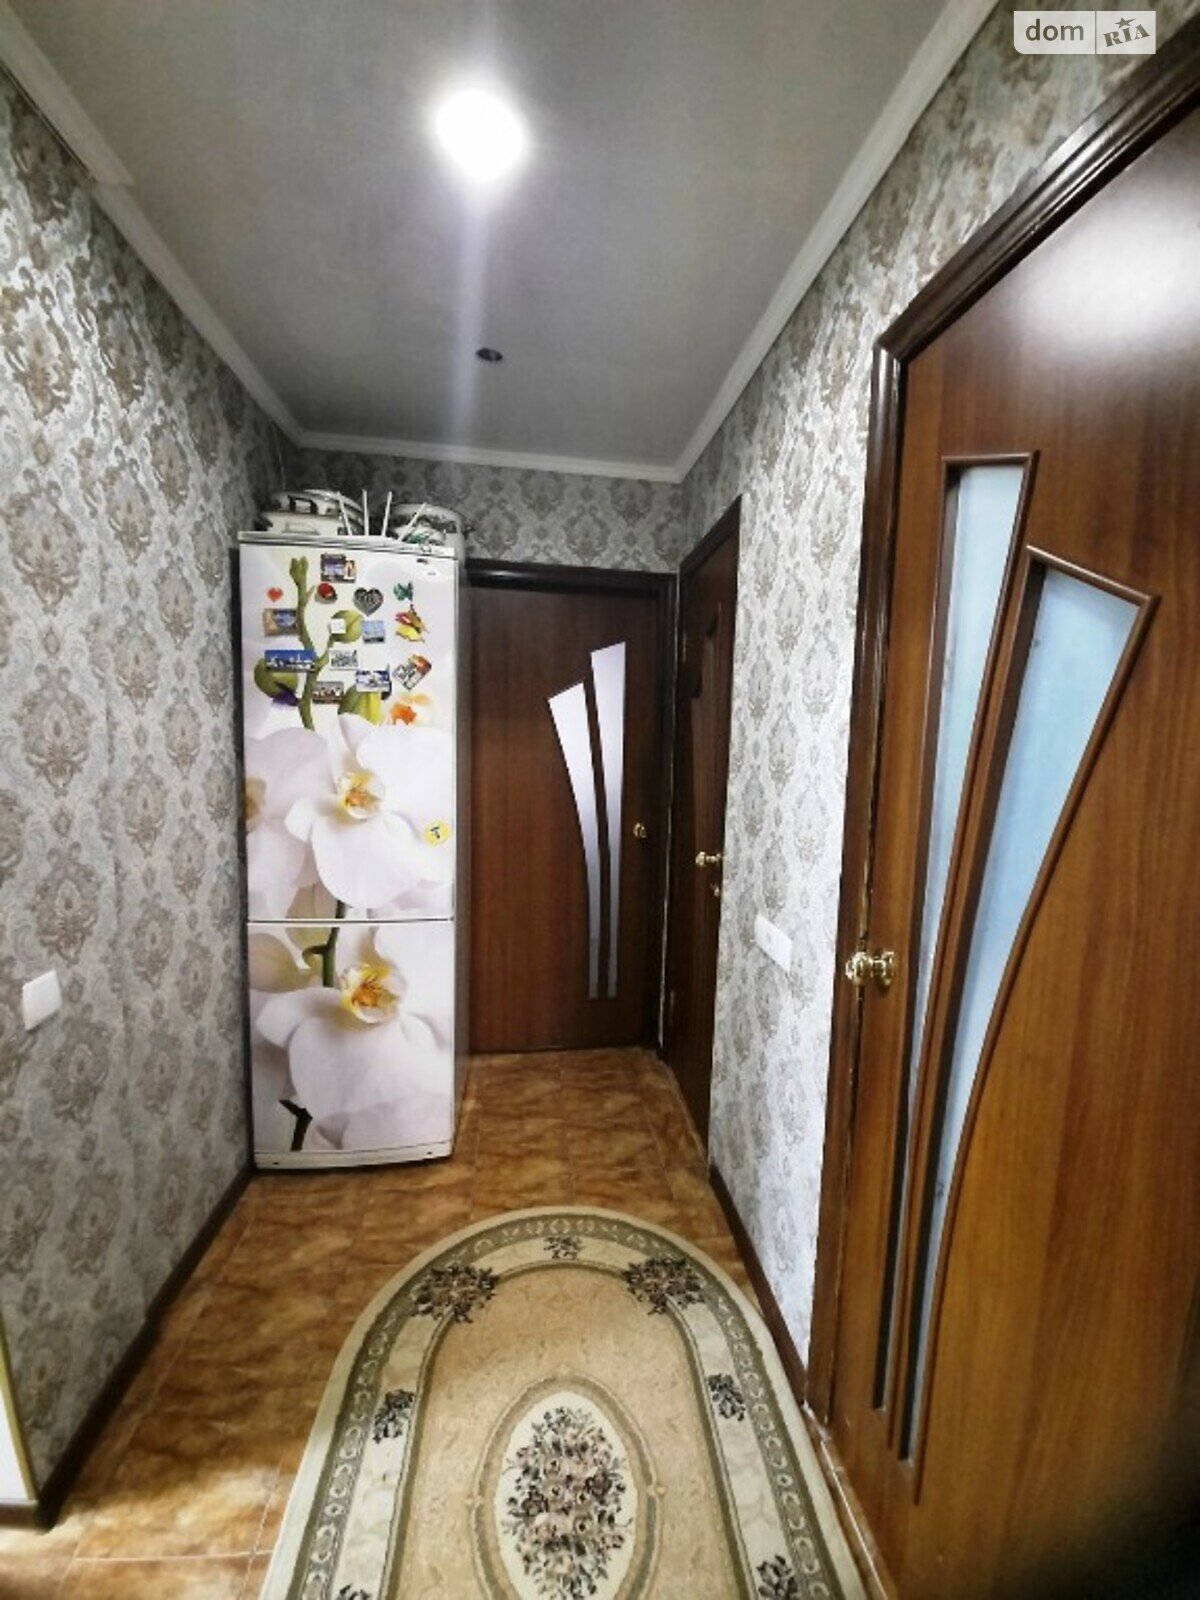 Продажа трехкомнатной квартиры в Черкассах, на ул. Сумгаитская 30, район ЮЗР фото 1